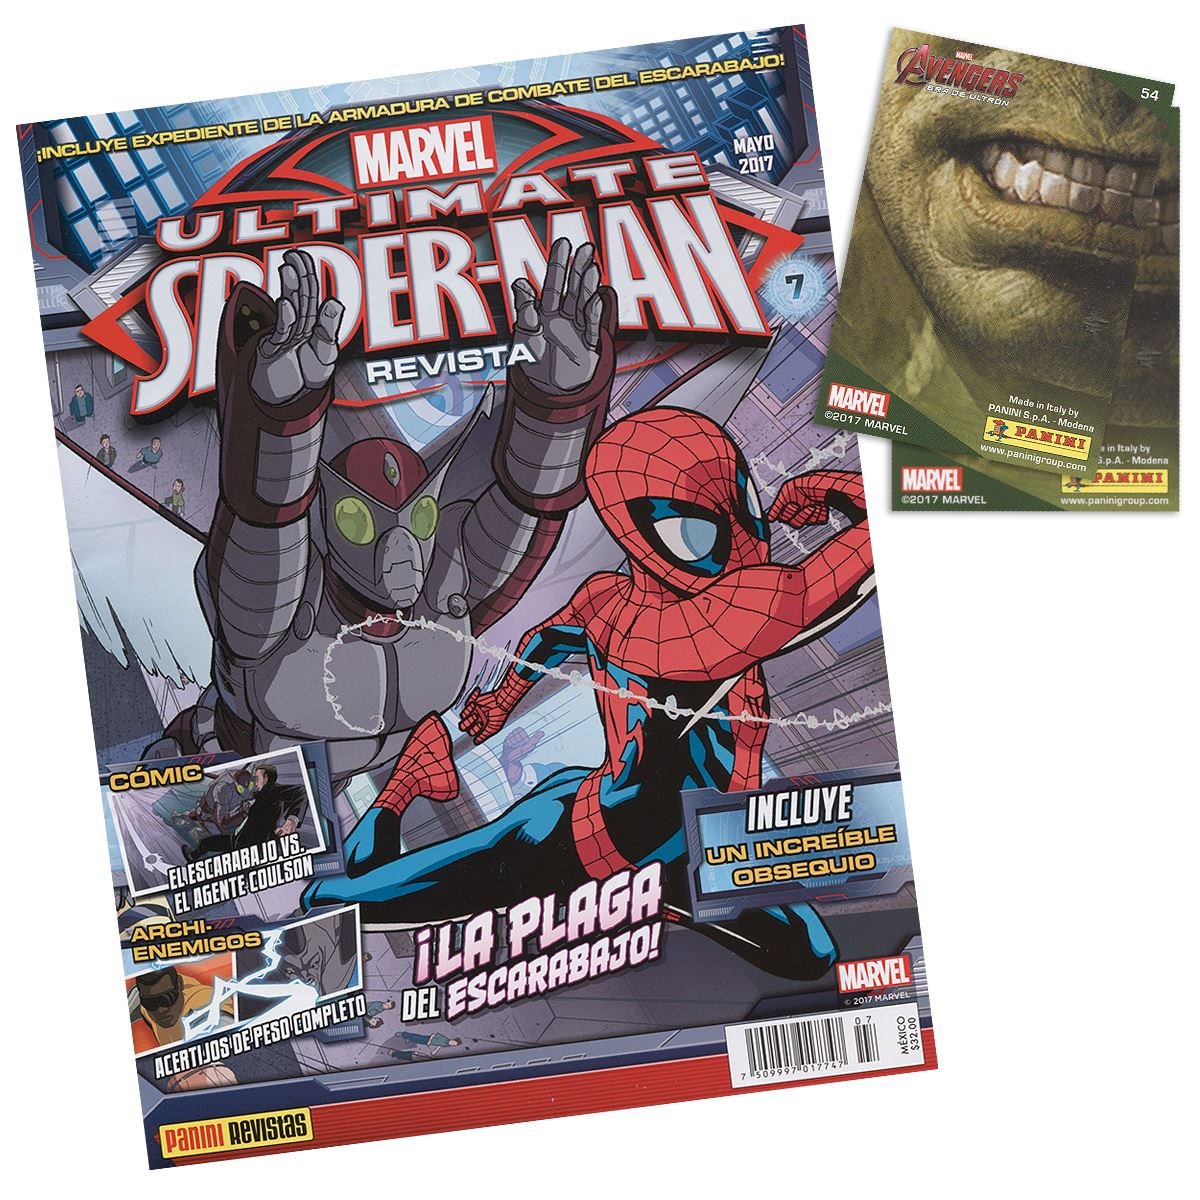 Revista ultimate spiderman 7